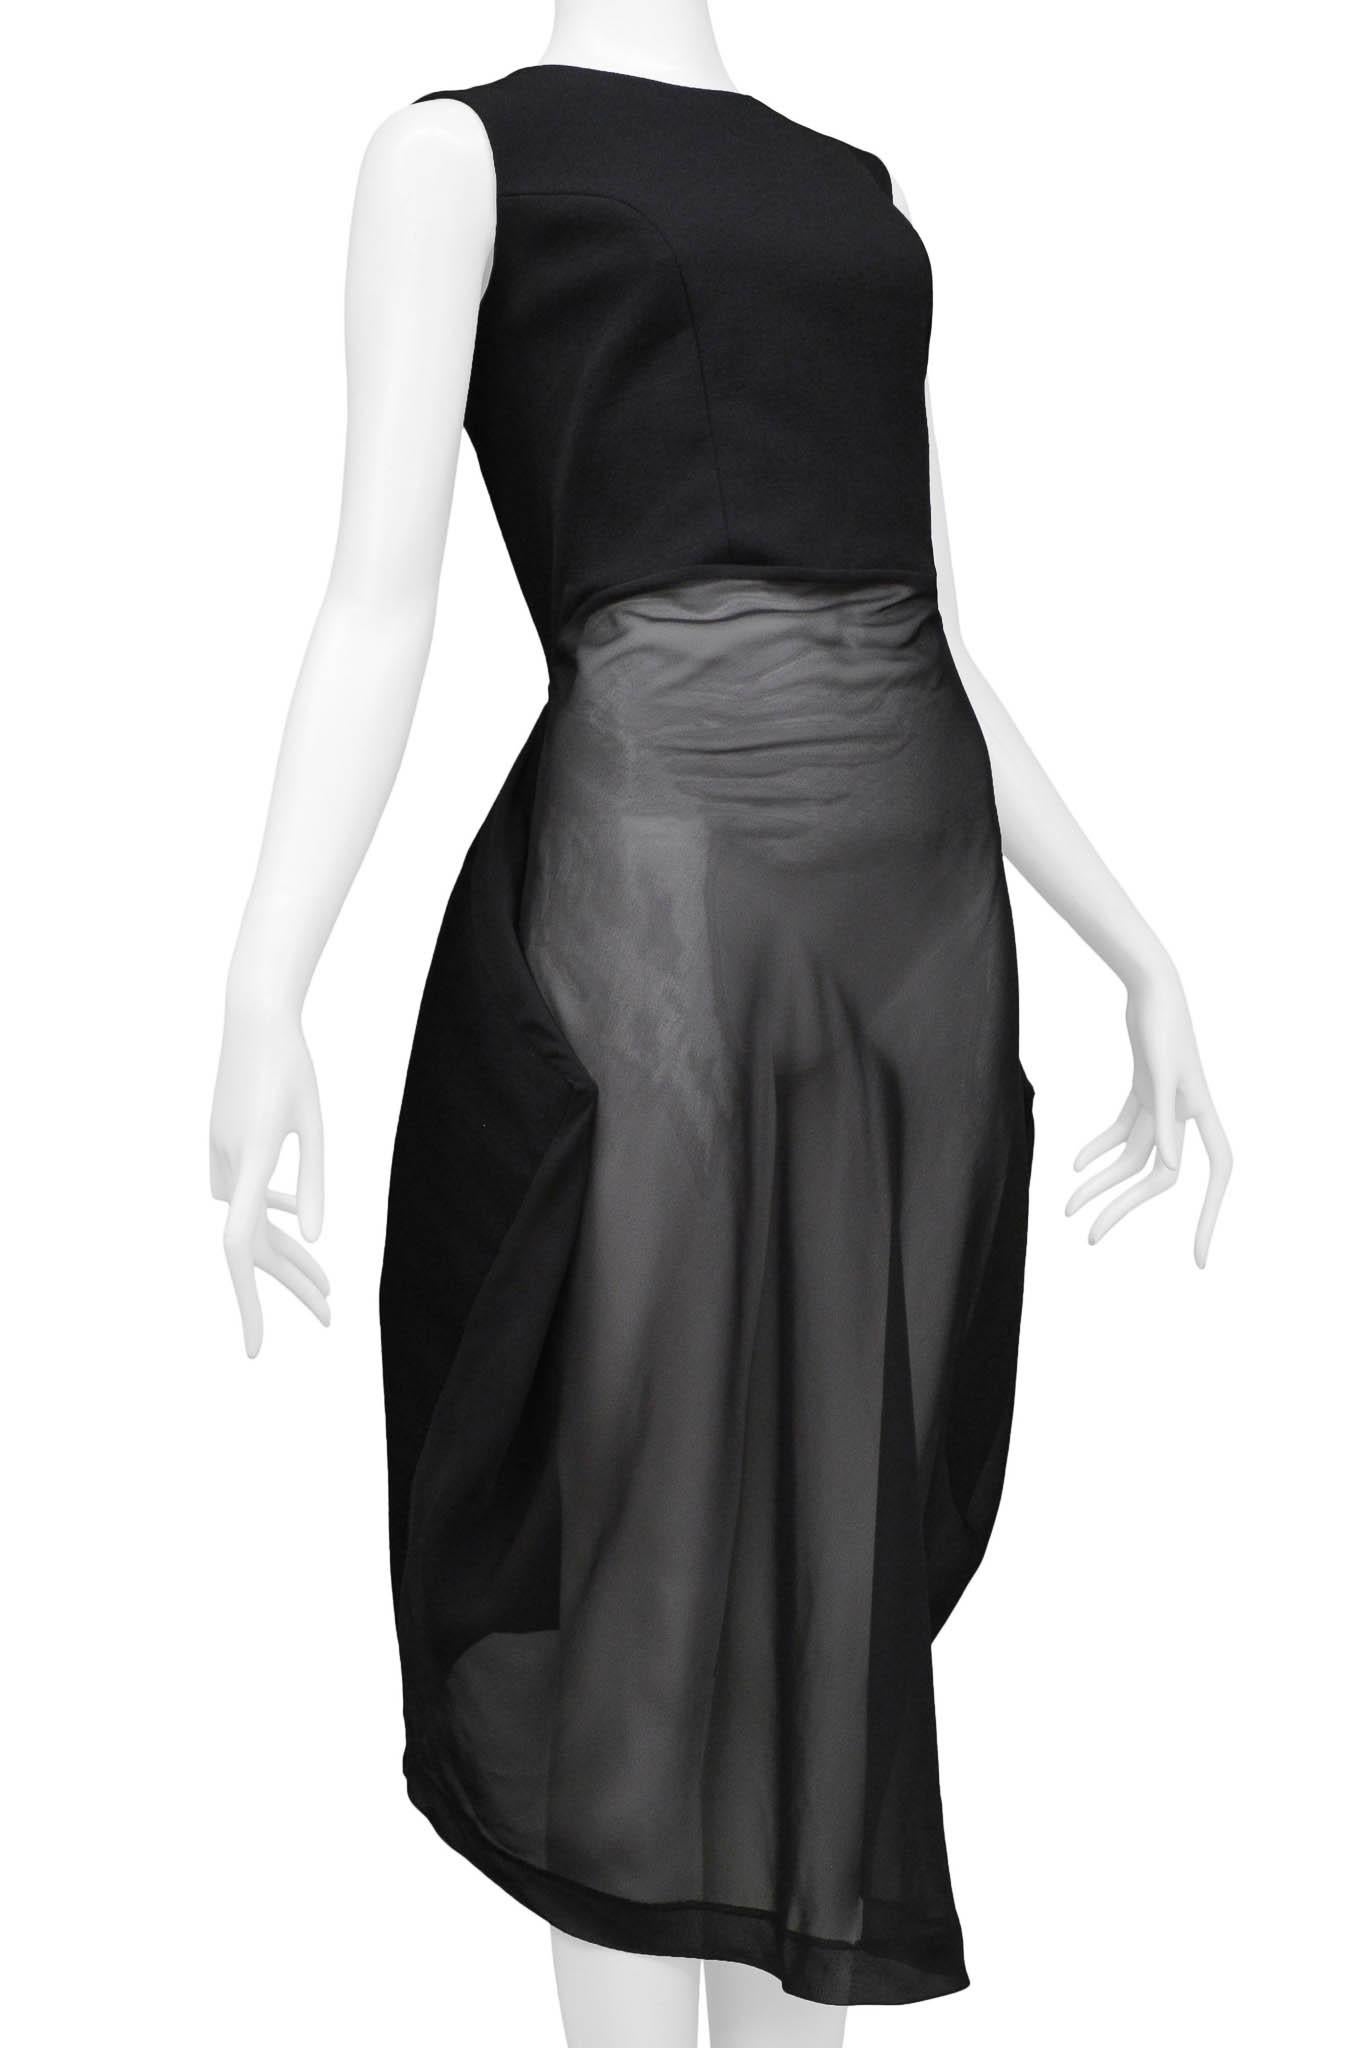 Comme Des Garcons Black Sheer Front Concept Dress 1997 For Sale 1